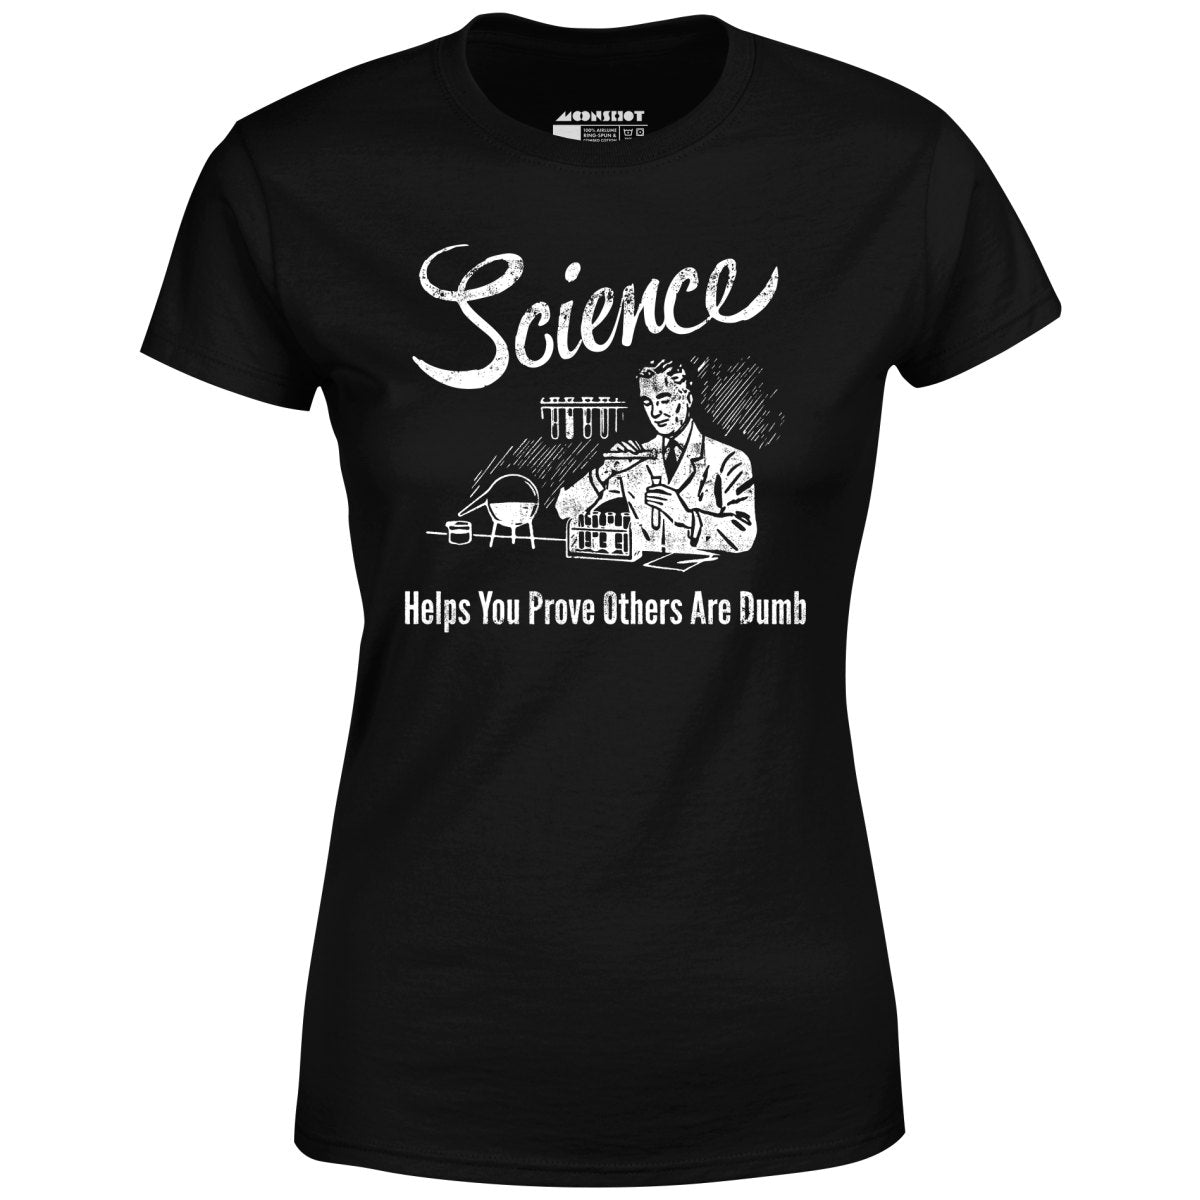 Science - Women's T-Shirt